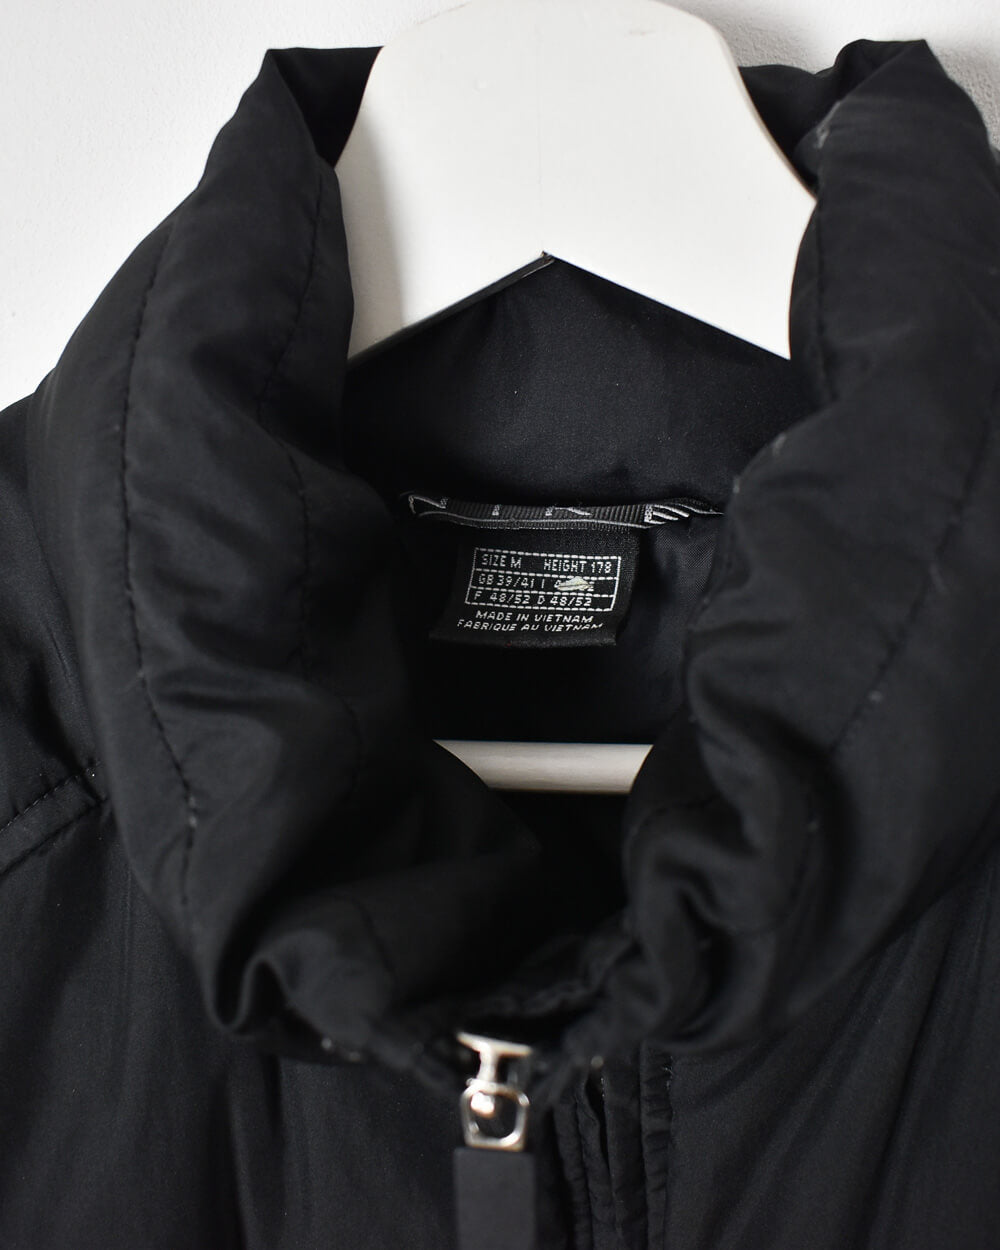 Black Nike Puffer Jacket - Medium